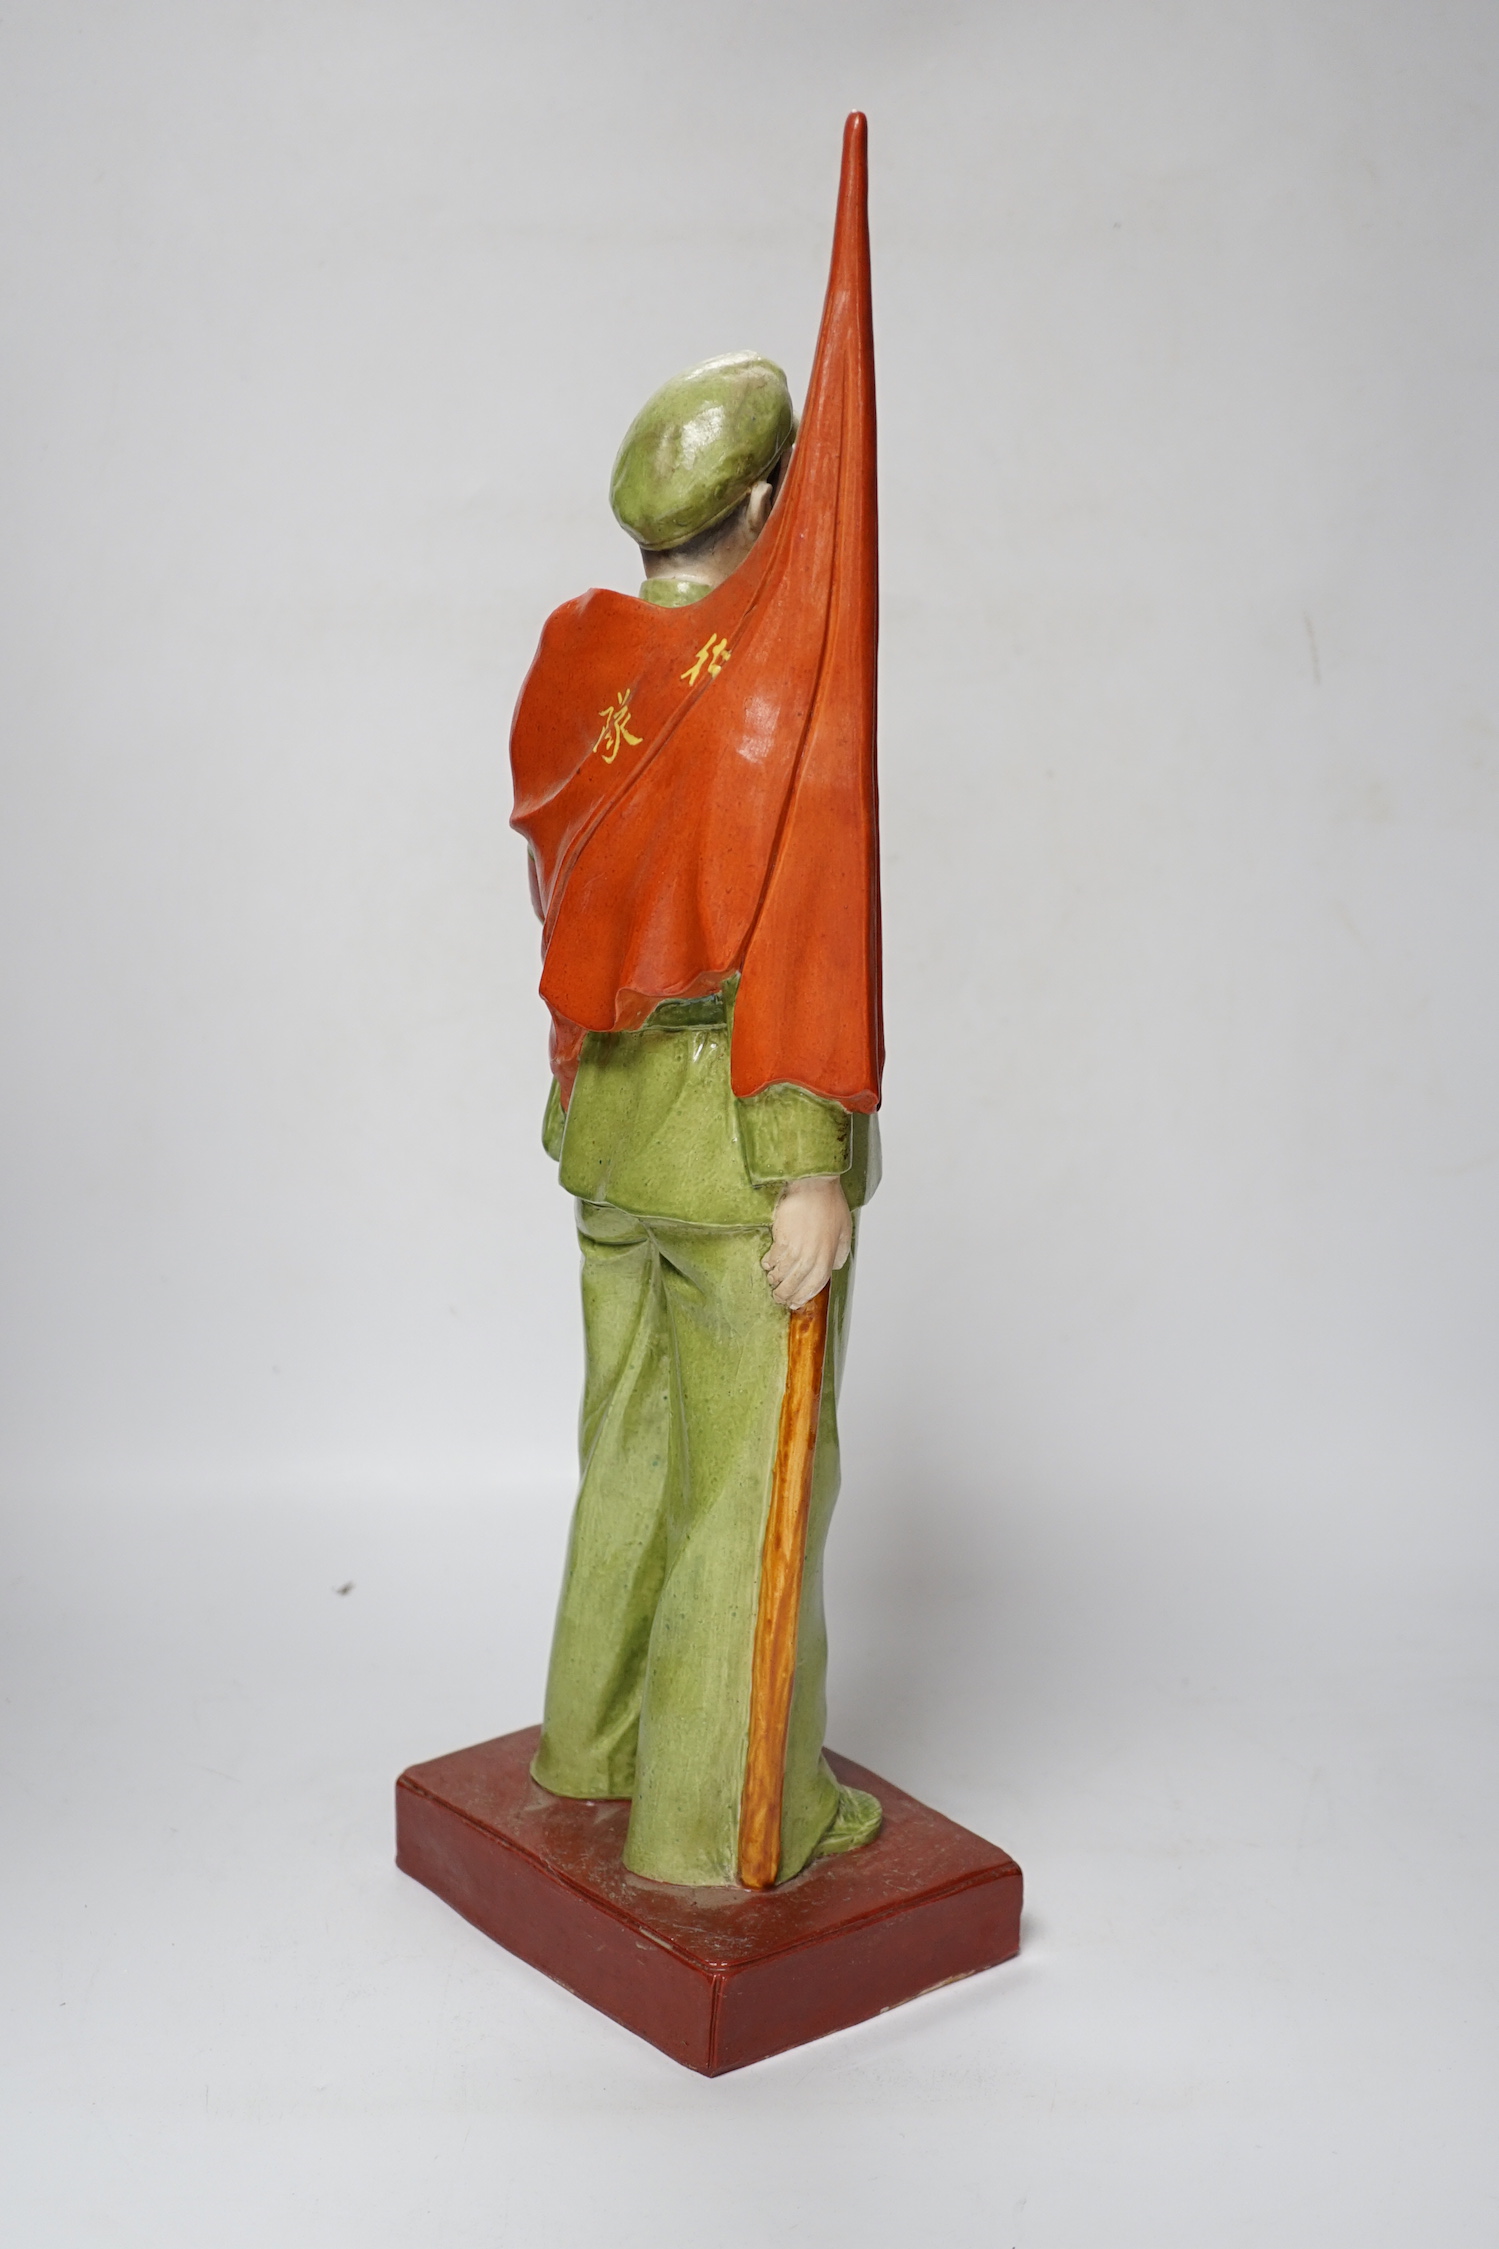 A figure of Mao Tse Tung (ex property of Sir David Tang), 48cm tall